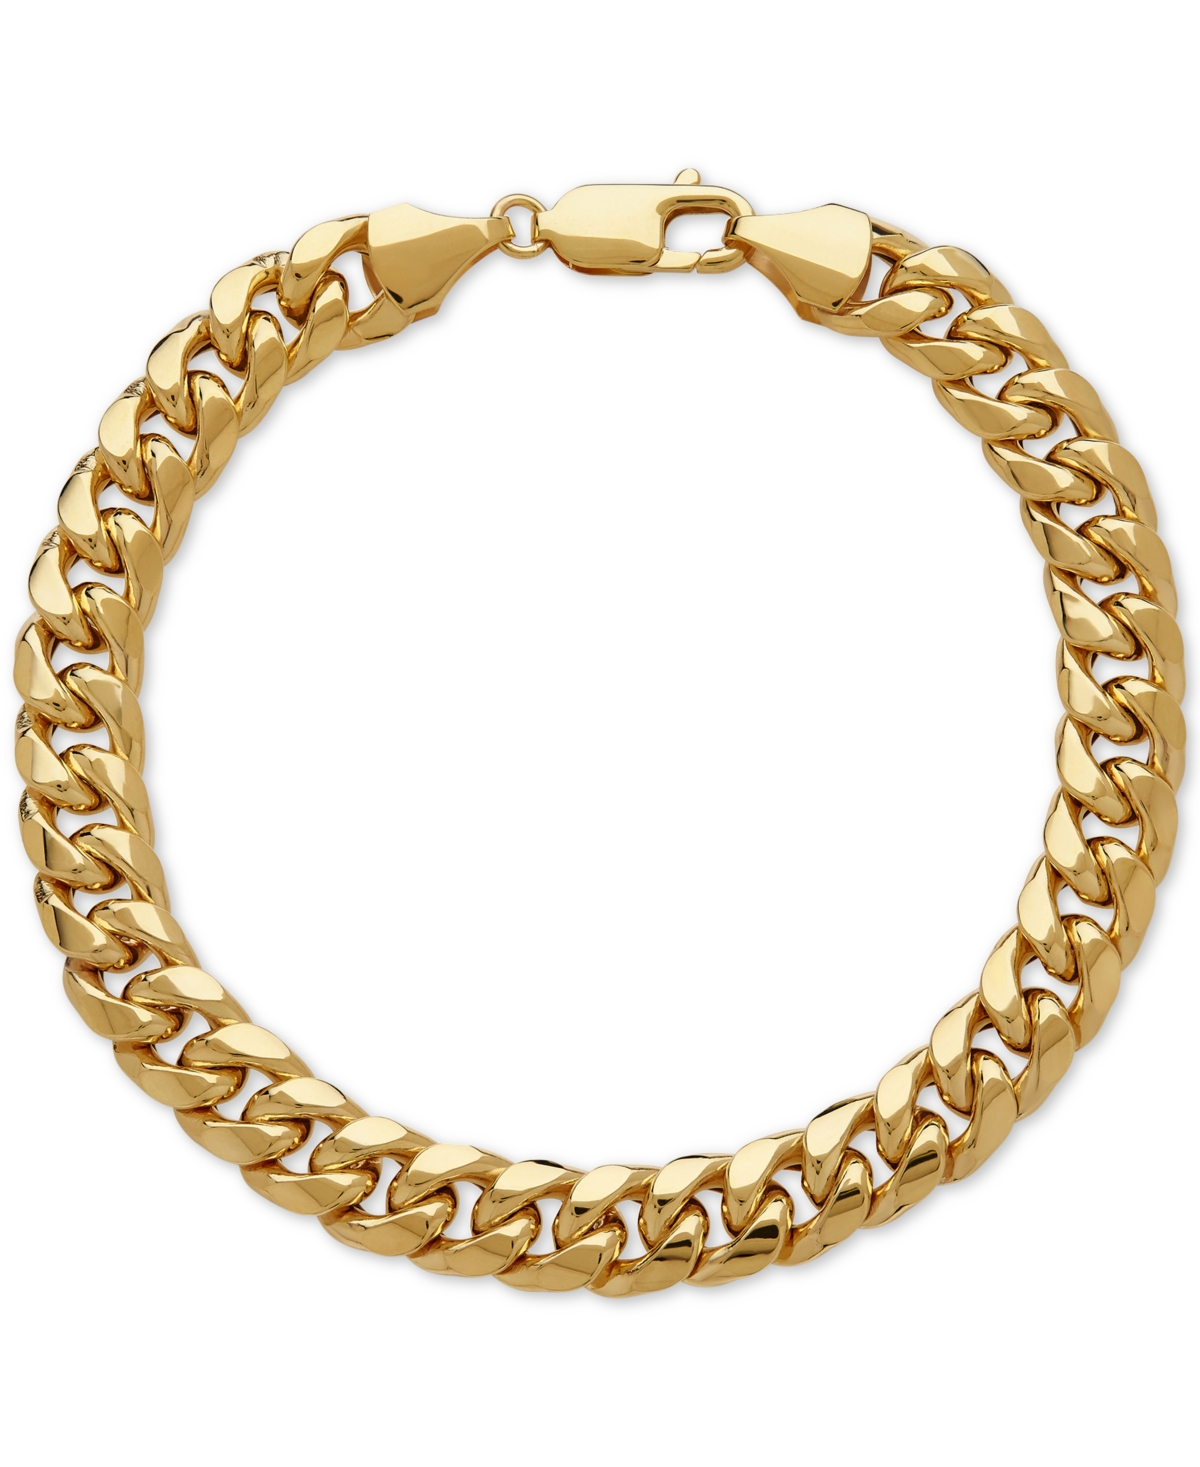 Men's Cuban Link Bracelet in 10k Gold - Yellow Gold